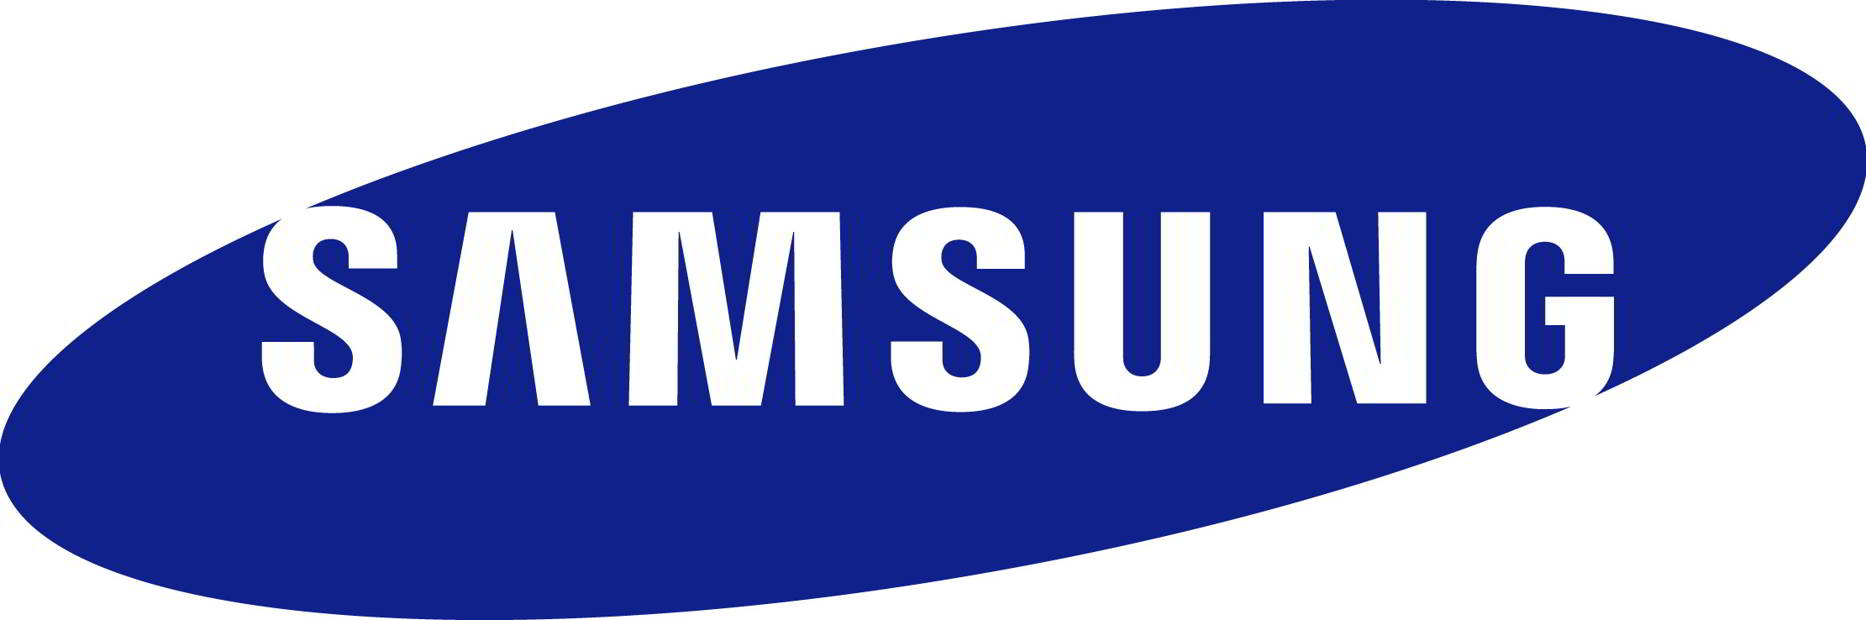 Samsungin liikevaihto Q4 2015